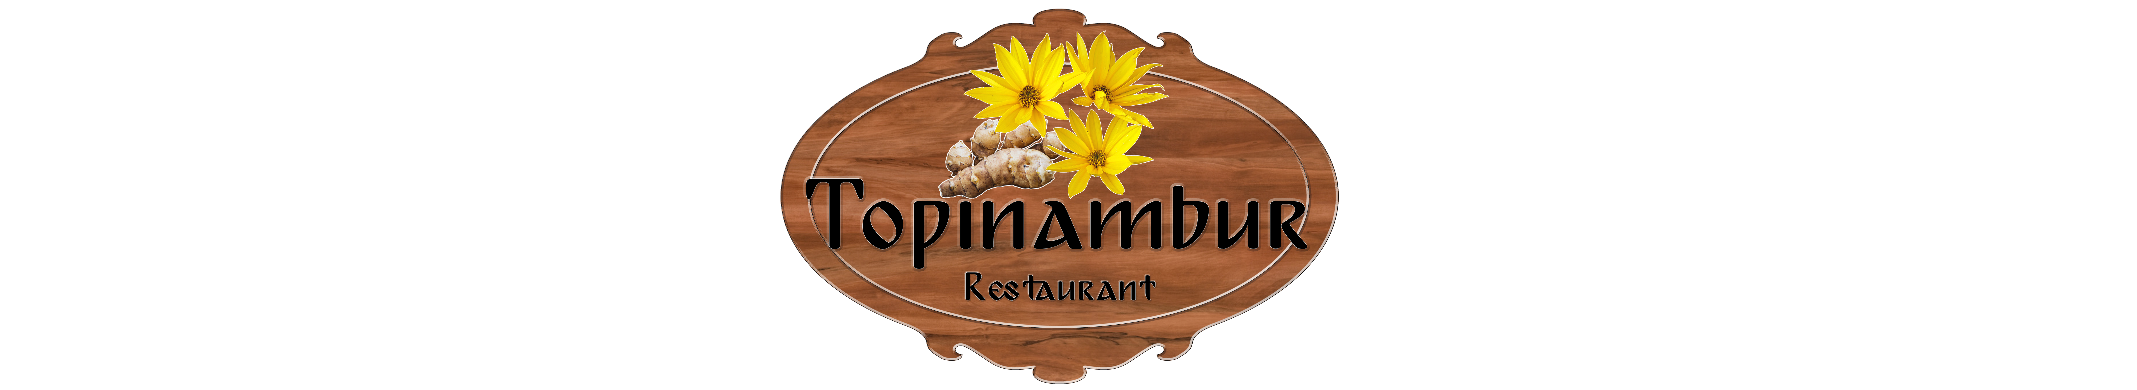 Restaurant Topinambur